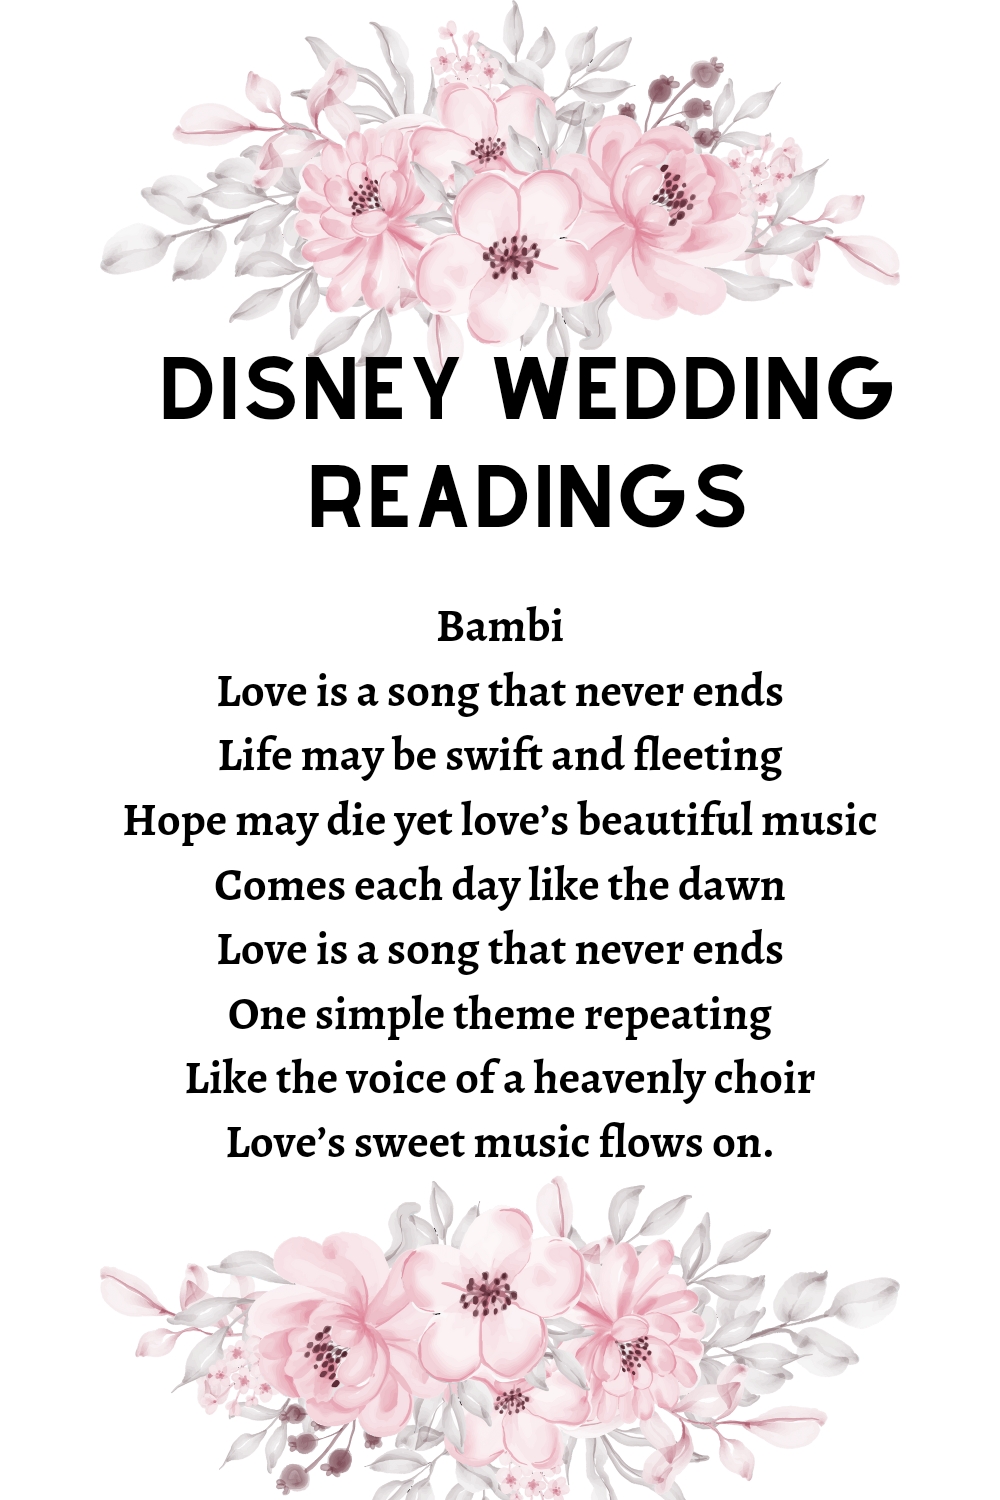 Disney wedding readings